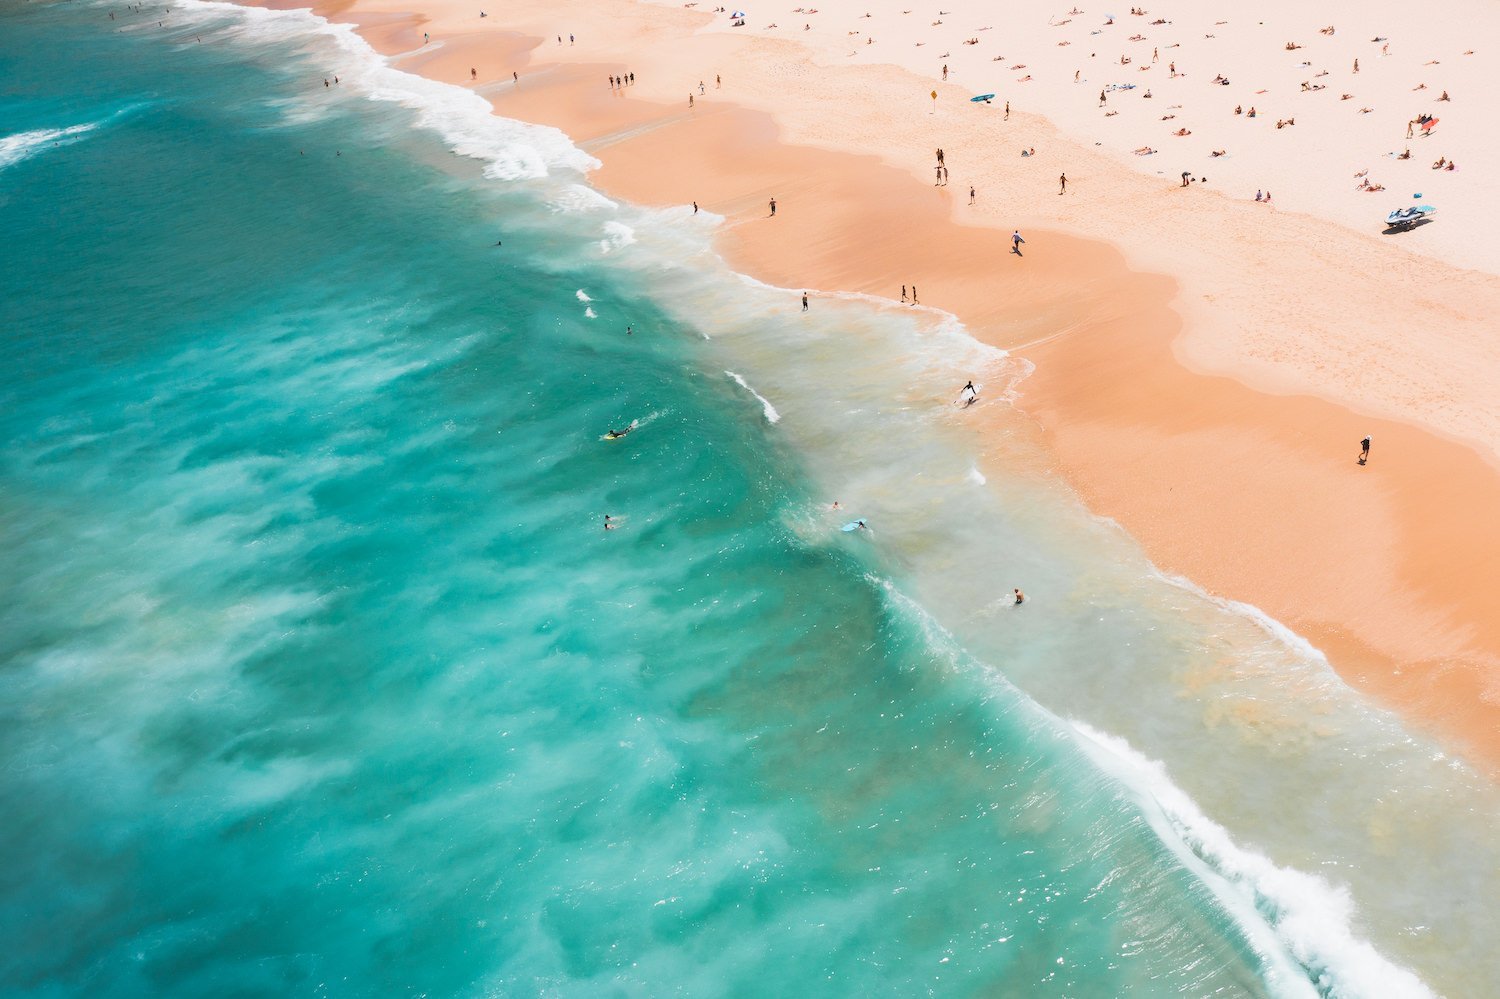 Bondi Beach Noon | Premium Framed Print - Peter Yan Studio